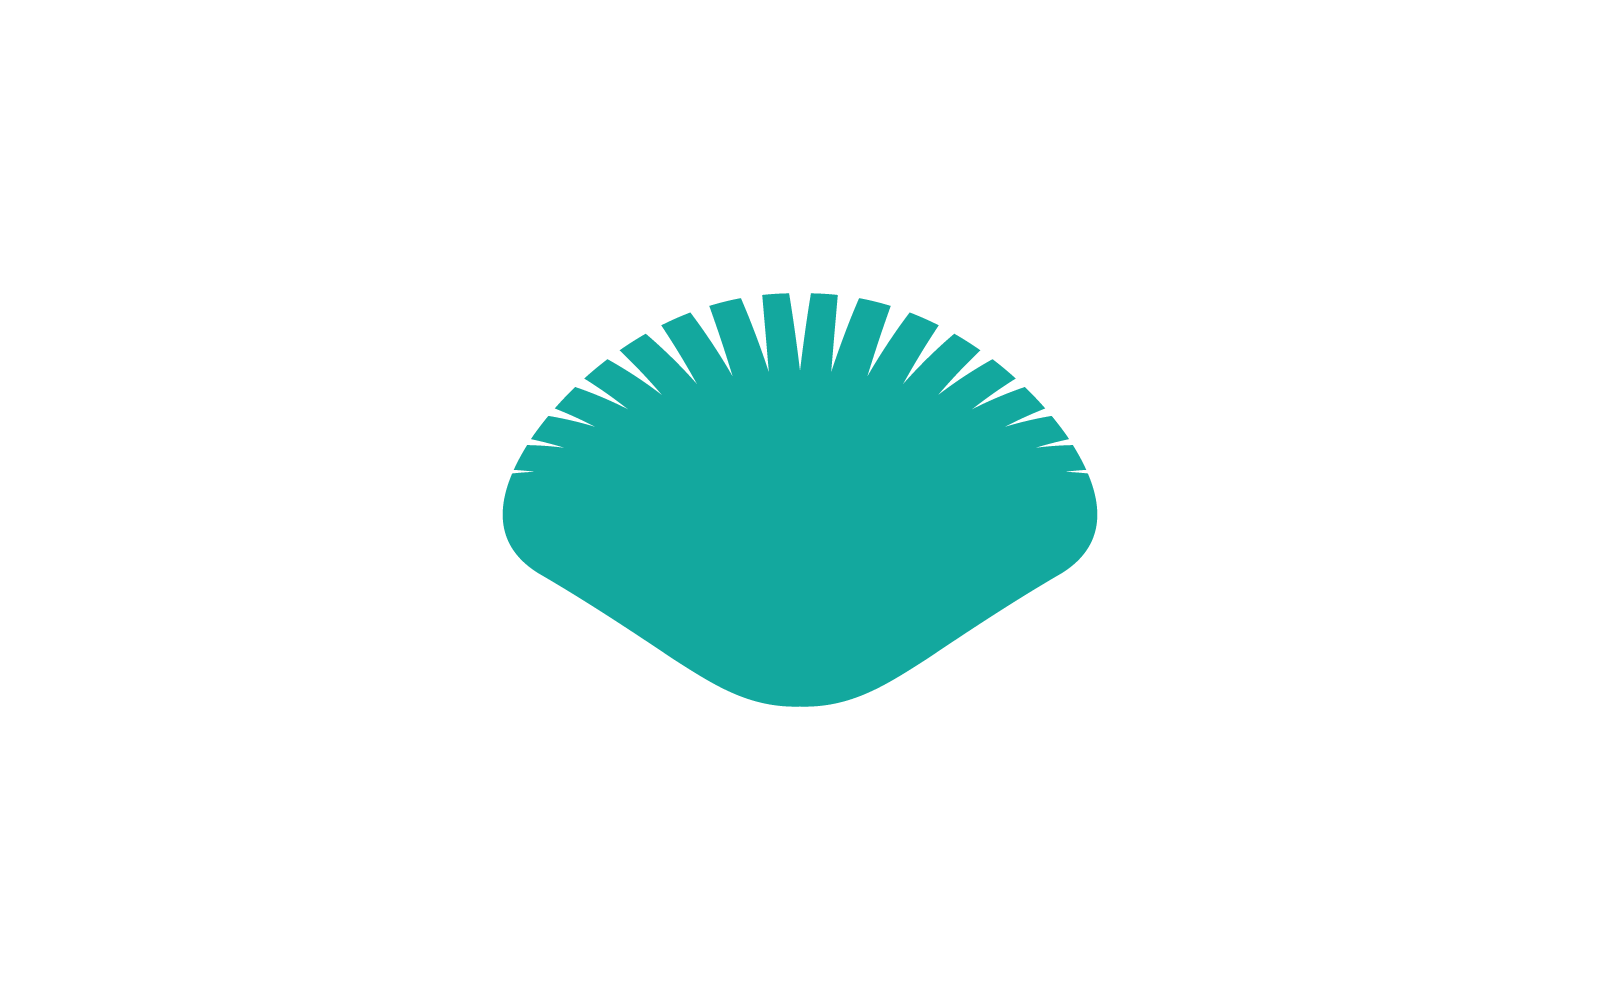 Shell logo illustration icon vector design